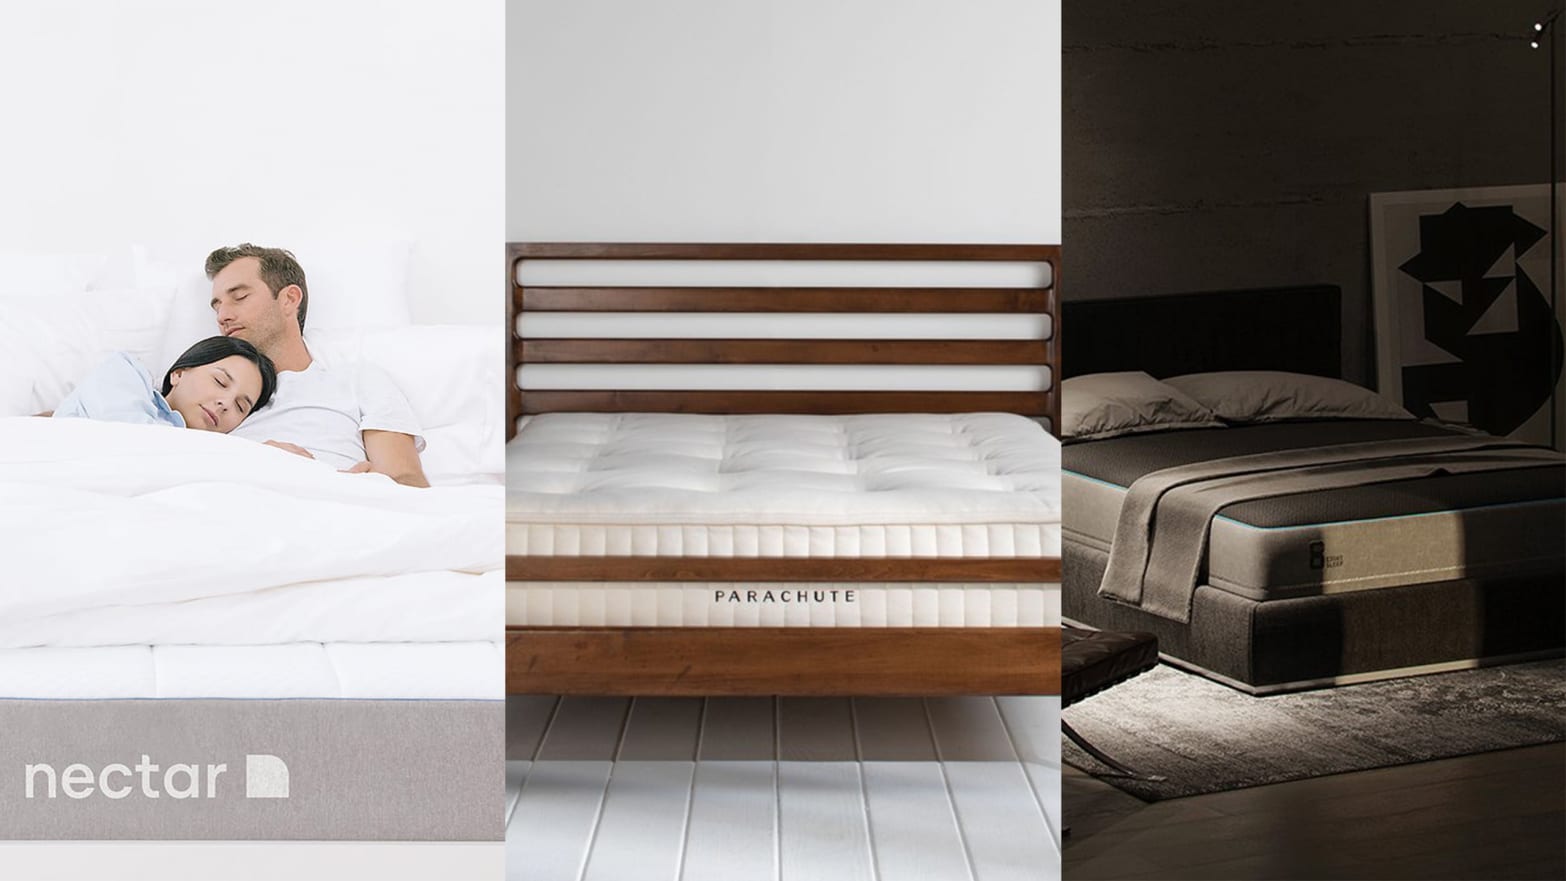 crowd investing sleep choices mattress